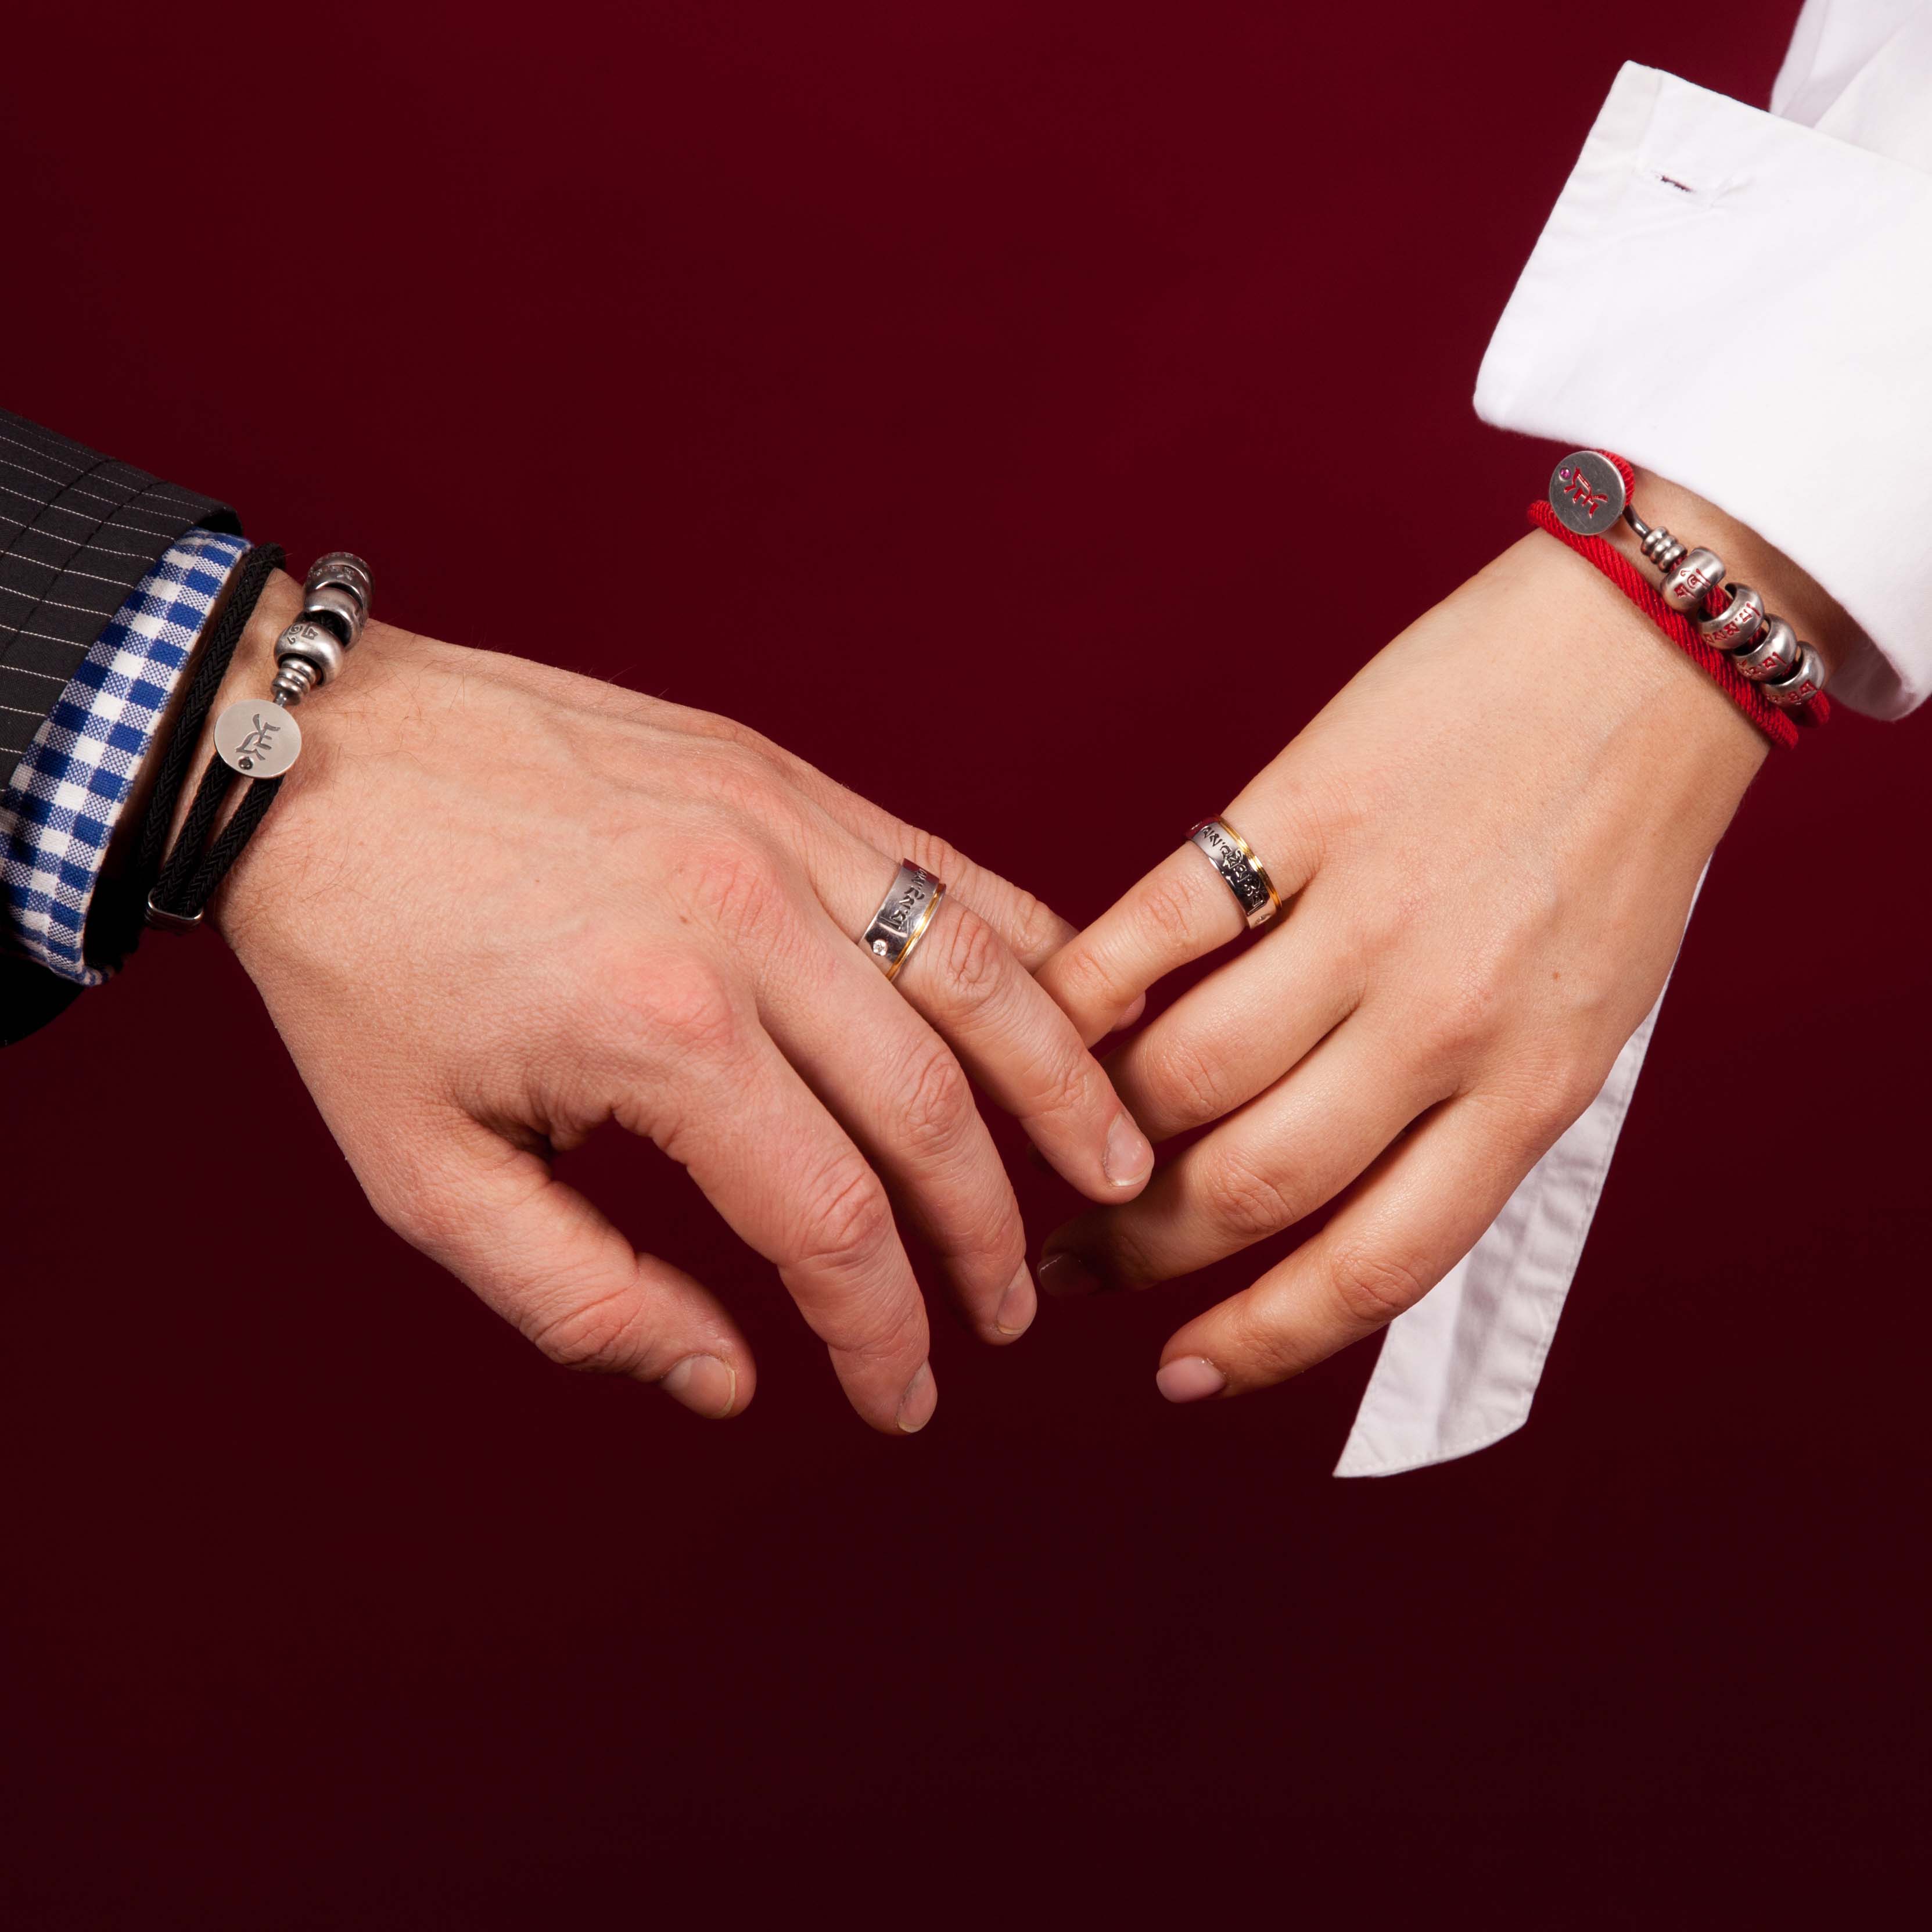 На какой руке носят кольцо брака. Обручальное кольцо на пальце. Парные кольца на руках. Надевает обручальное кольцо. Обручальные кольца парные на руках.